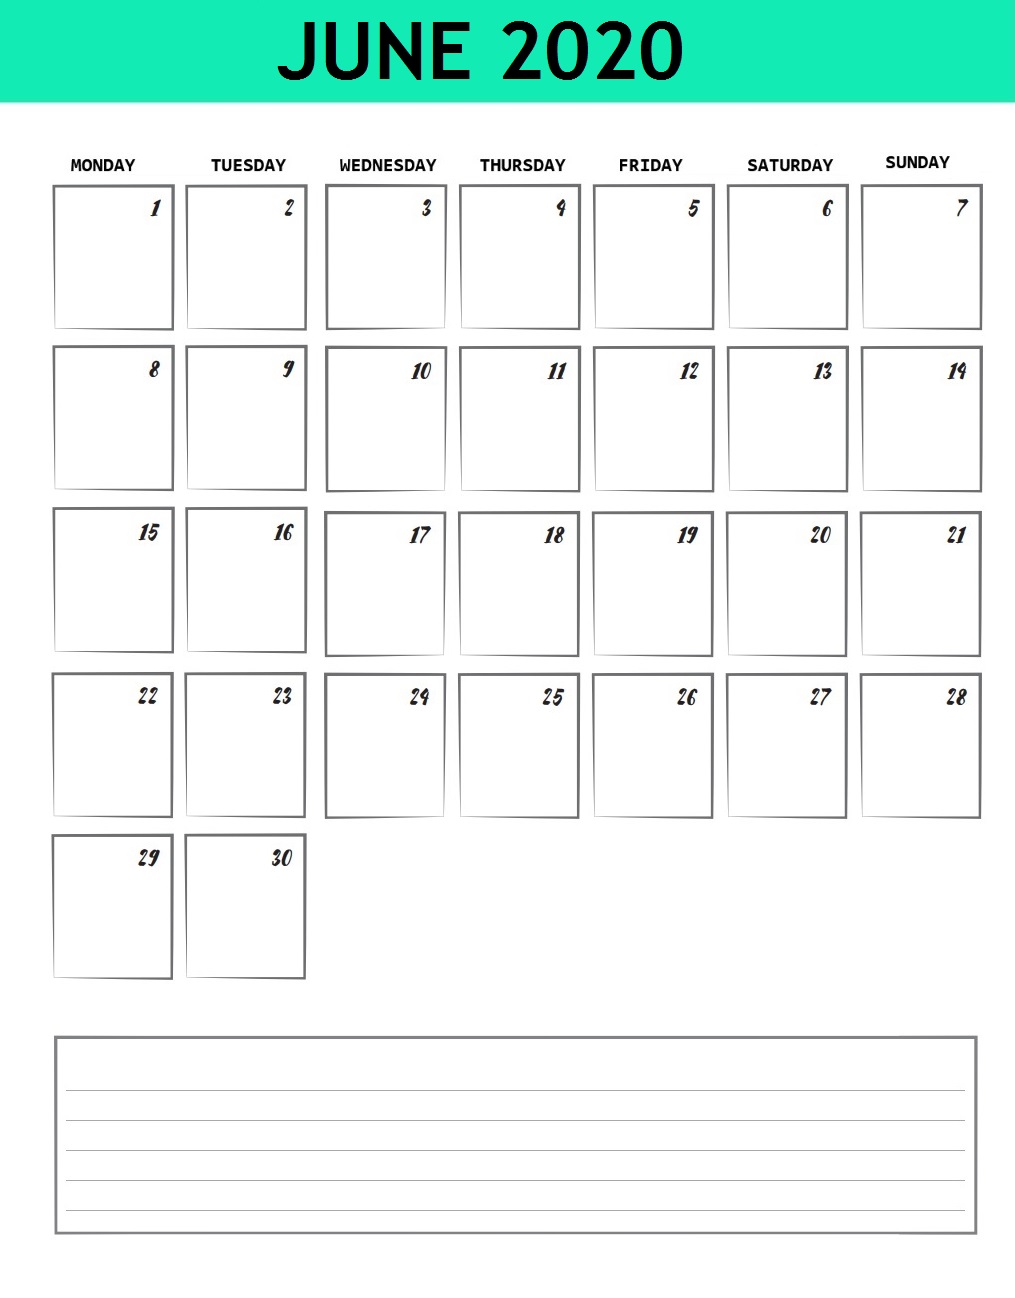 June 2020 Office Desk Calendar